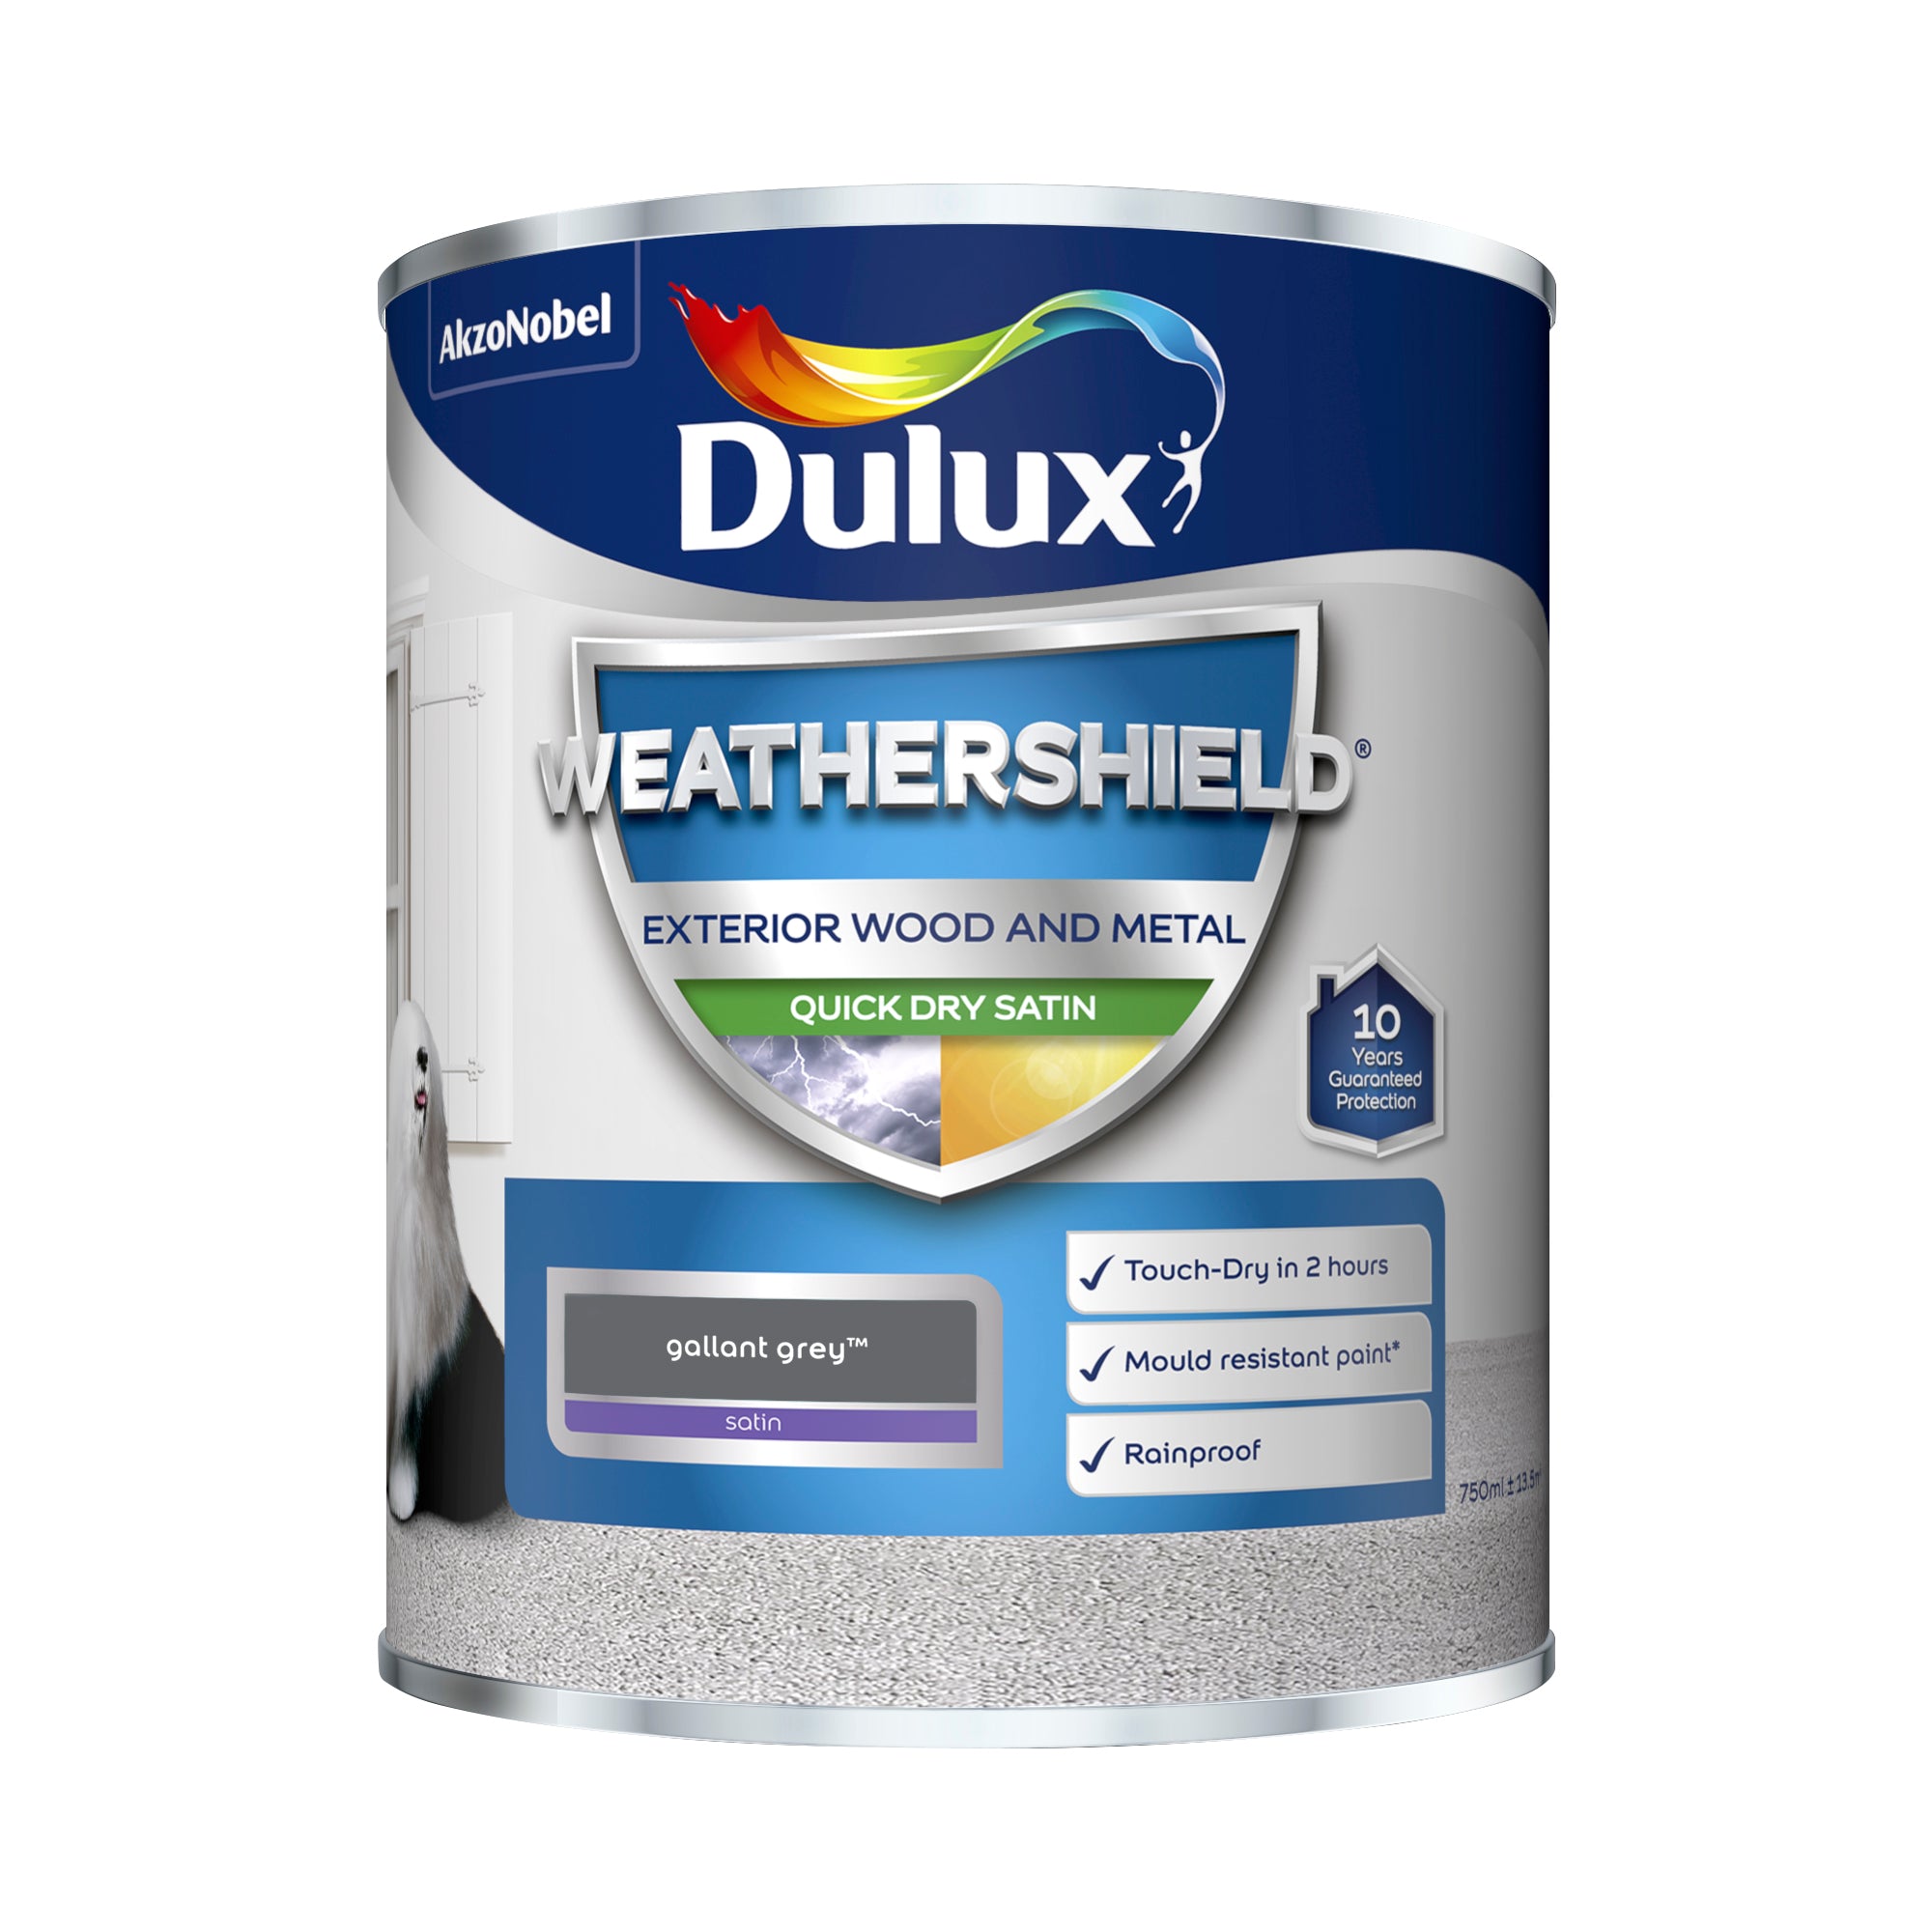 Dulux Weathershield Quick Dry Satin Gallant Grey 750ml